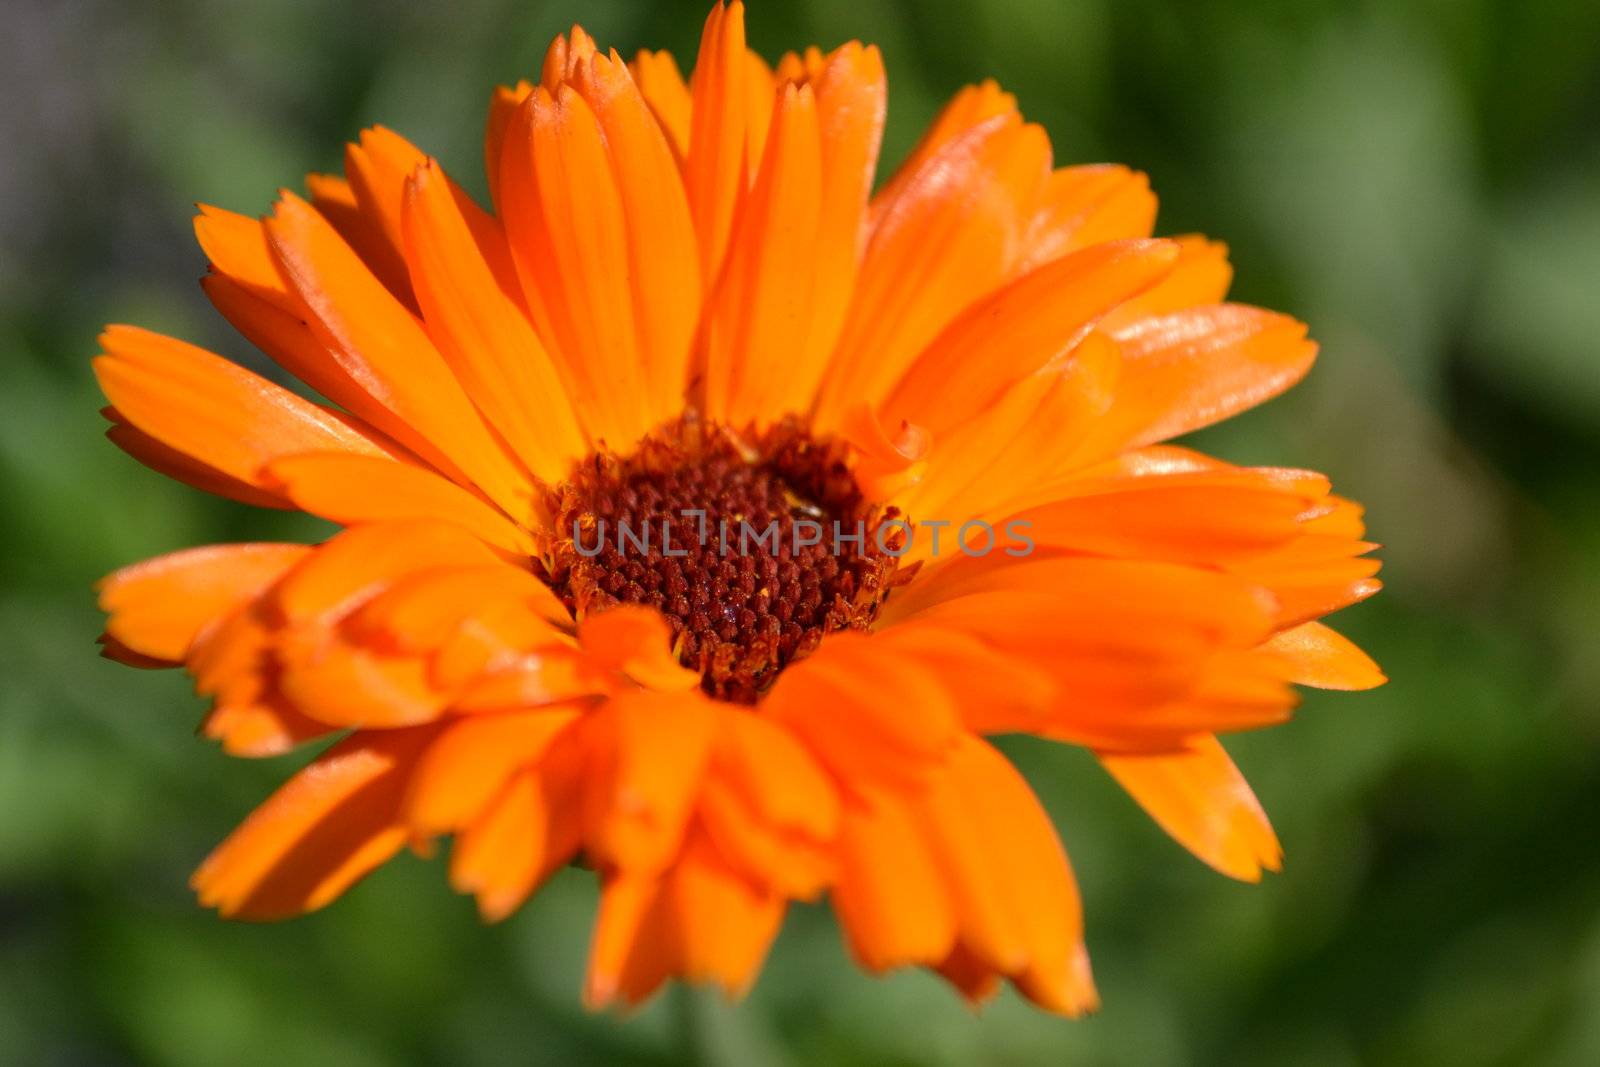 The orange flower over green background